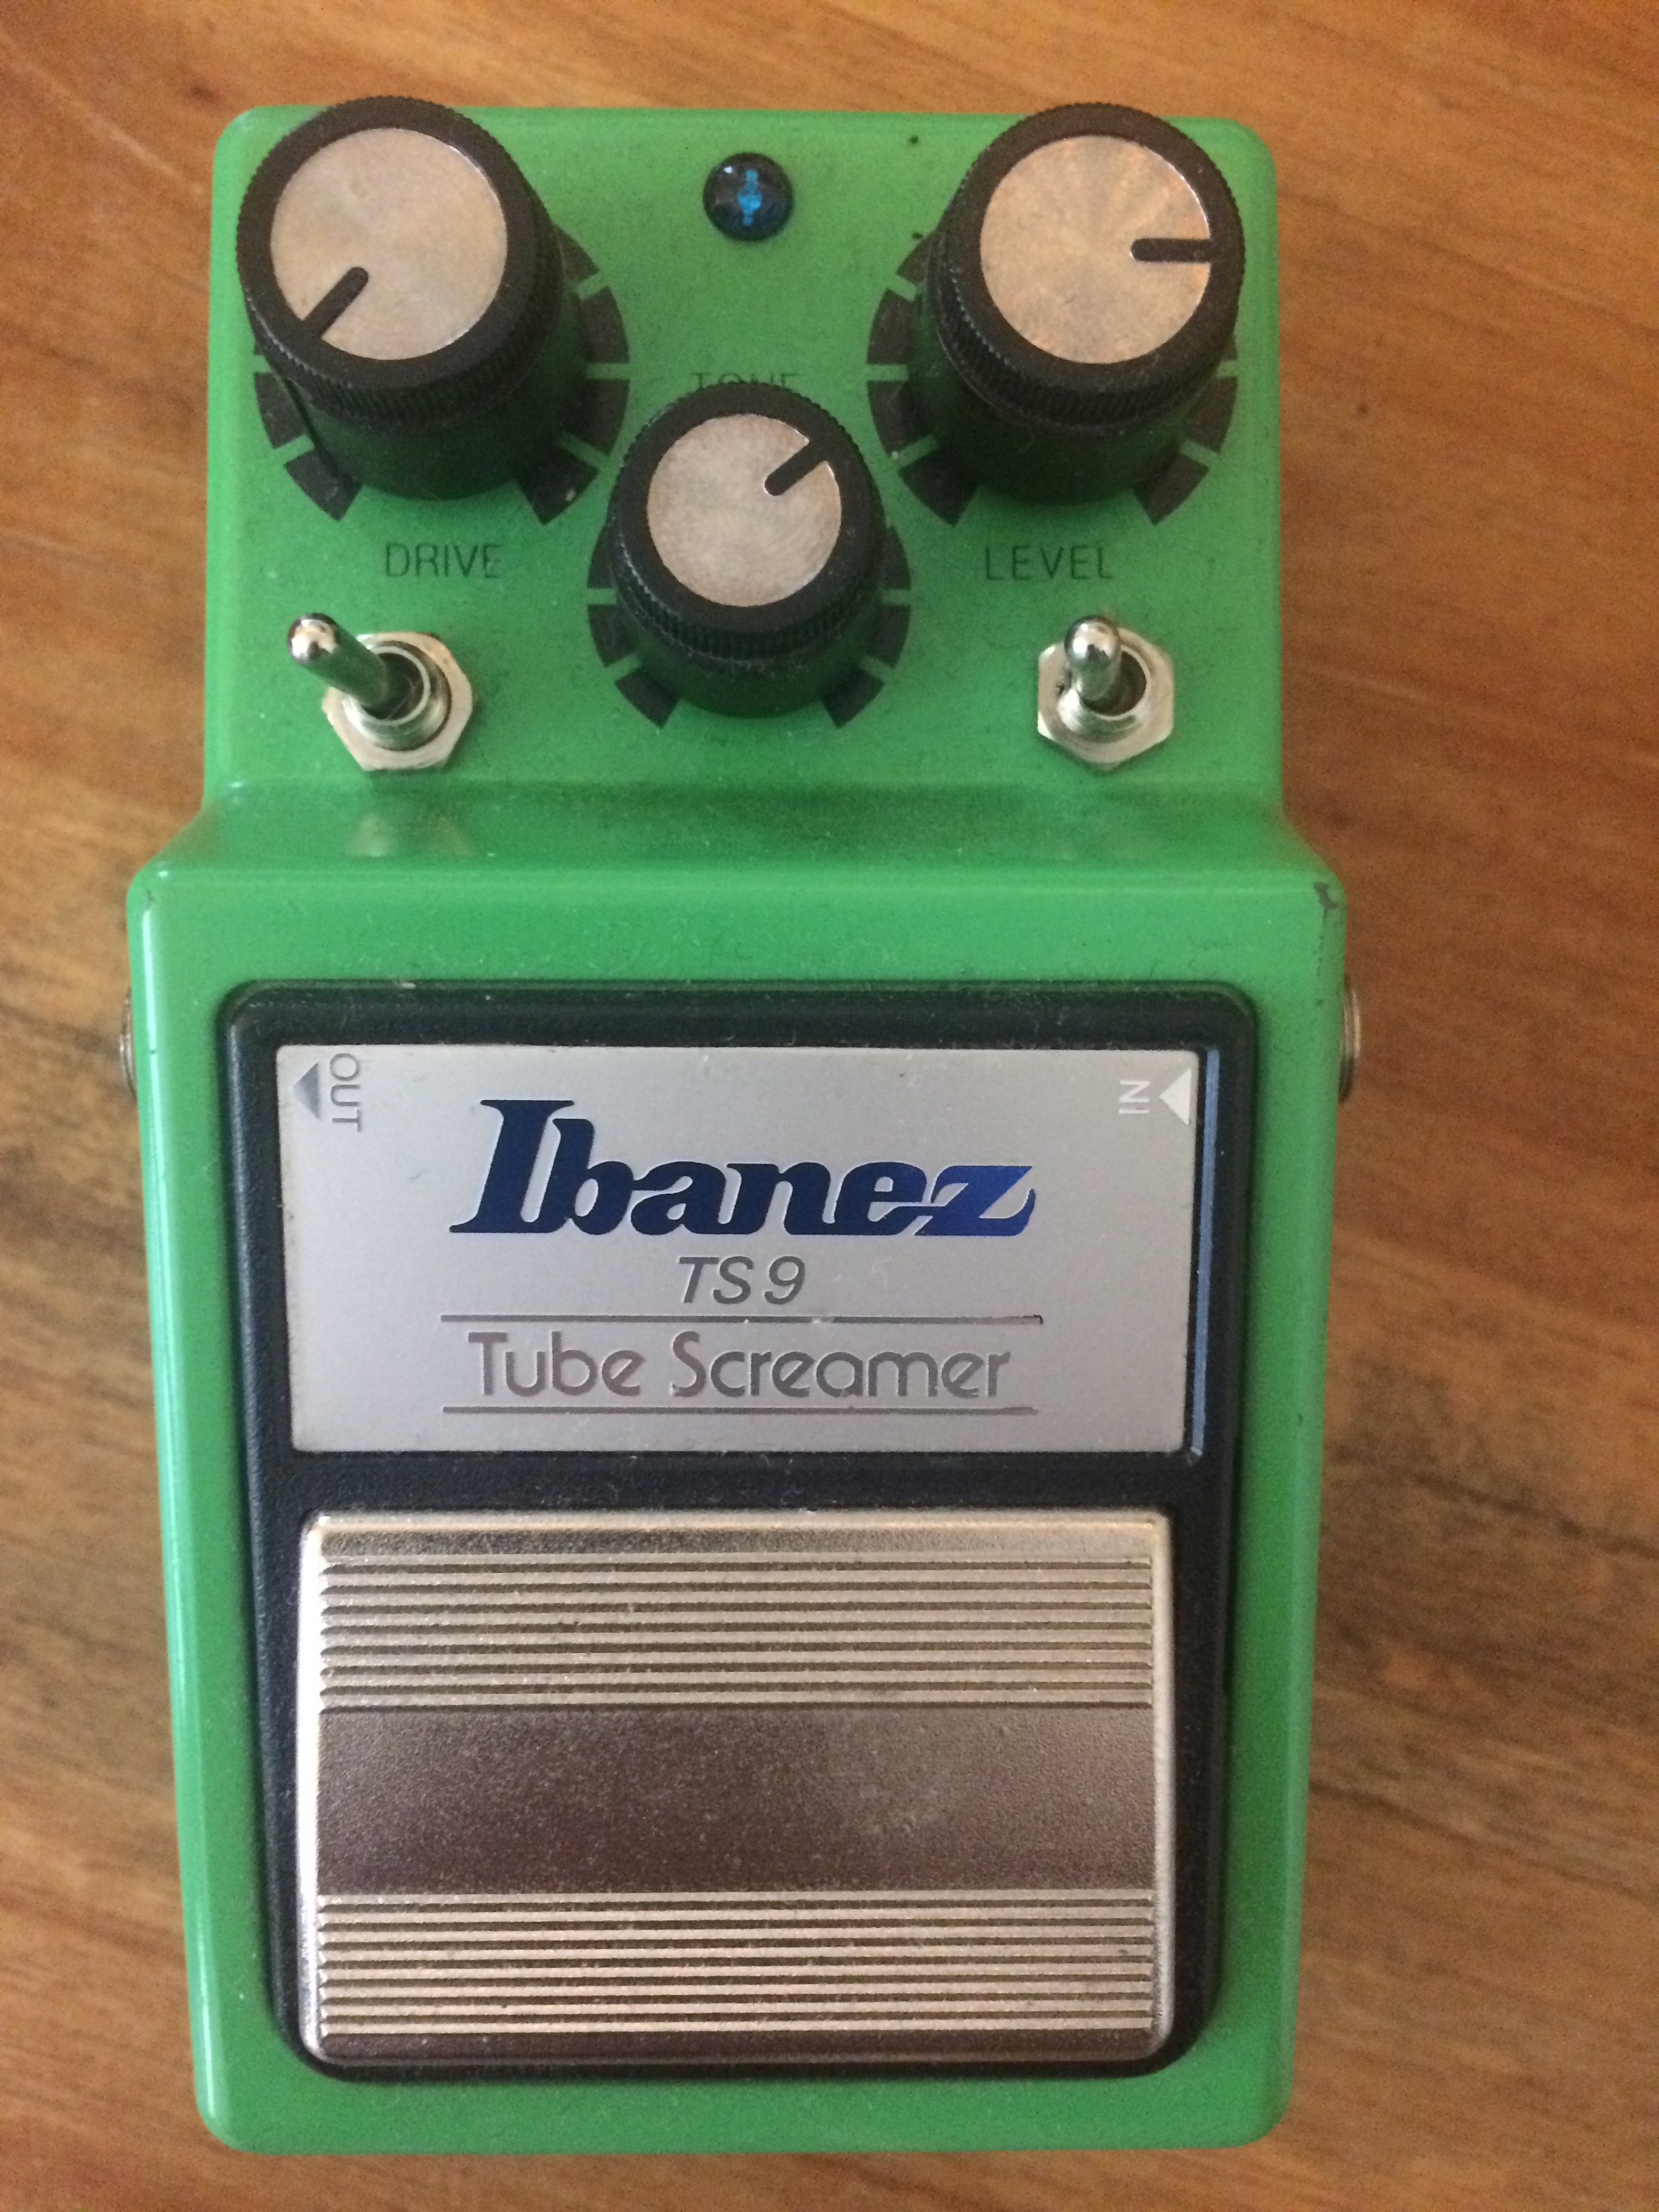 Ibanez TS9 Tube Screamer image (#1594502) - Audiofanzine